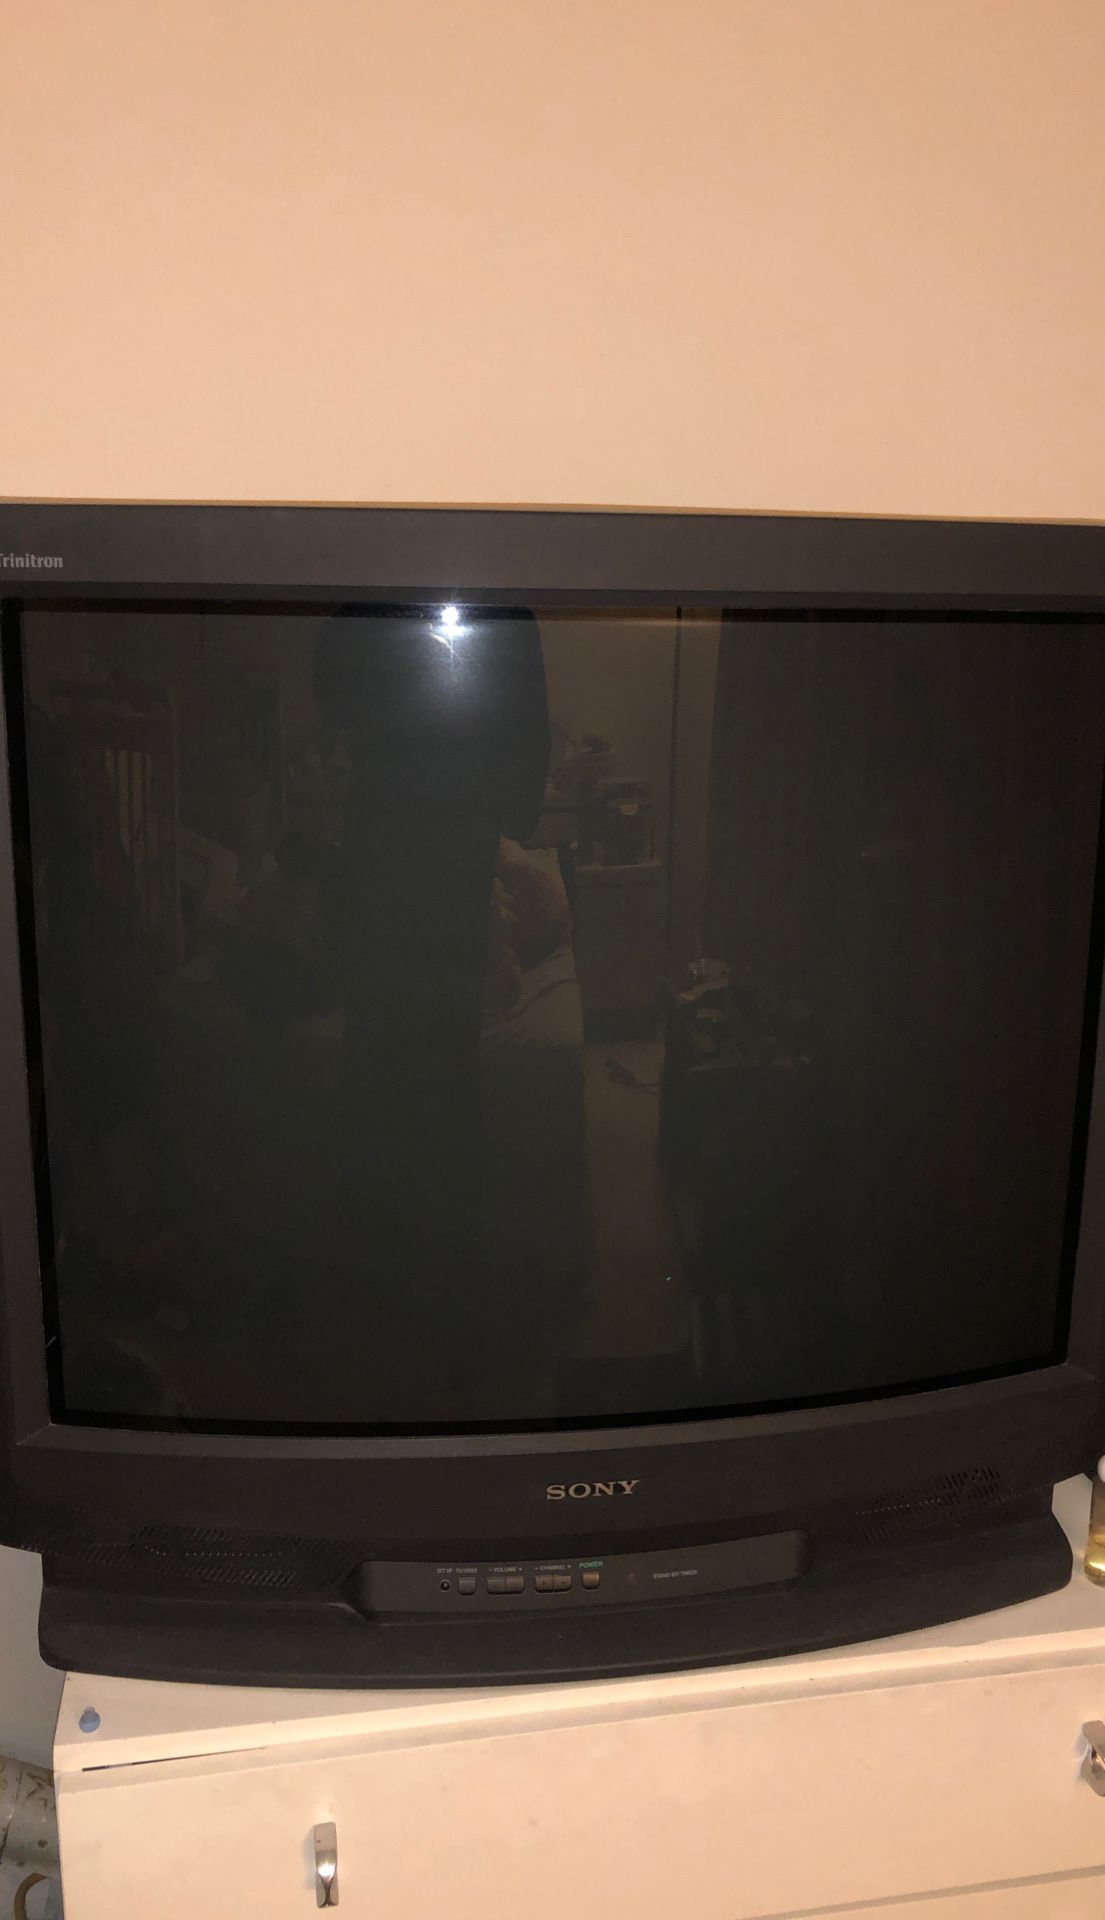 Sony trinitron TV black large size